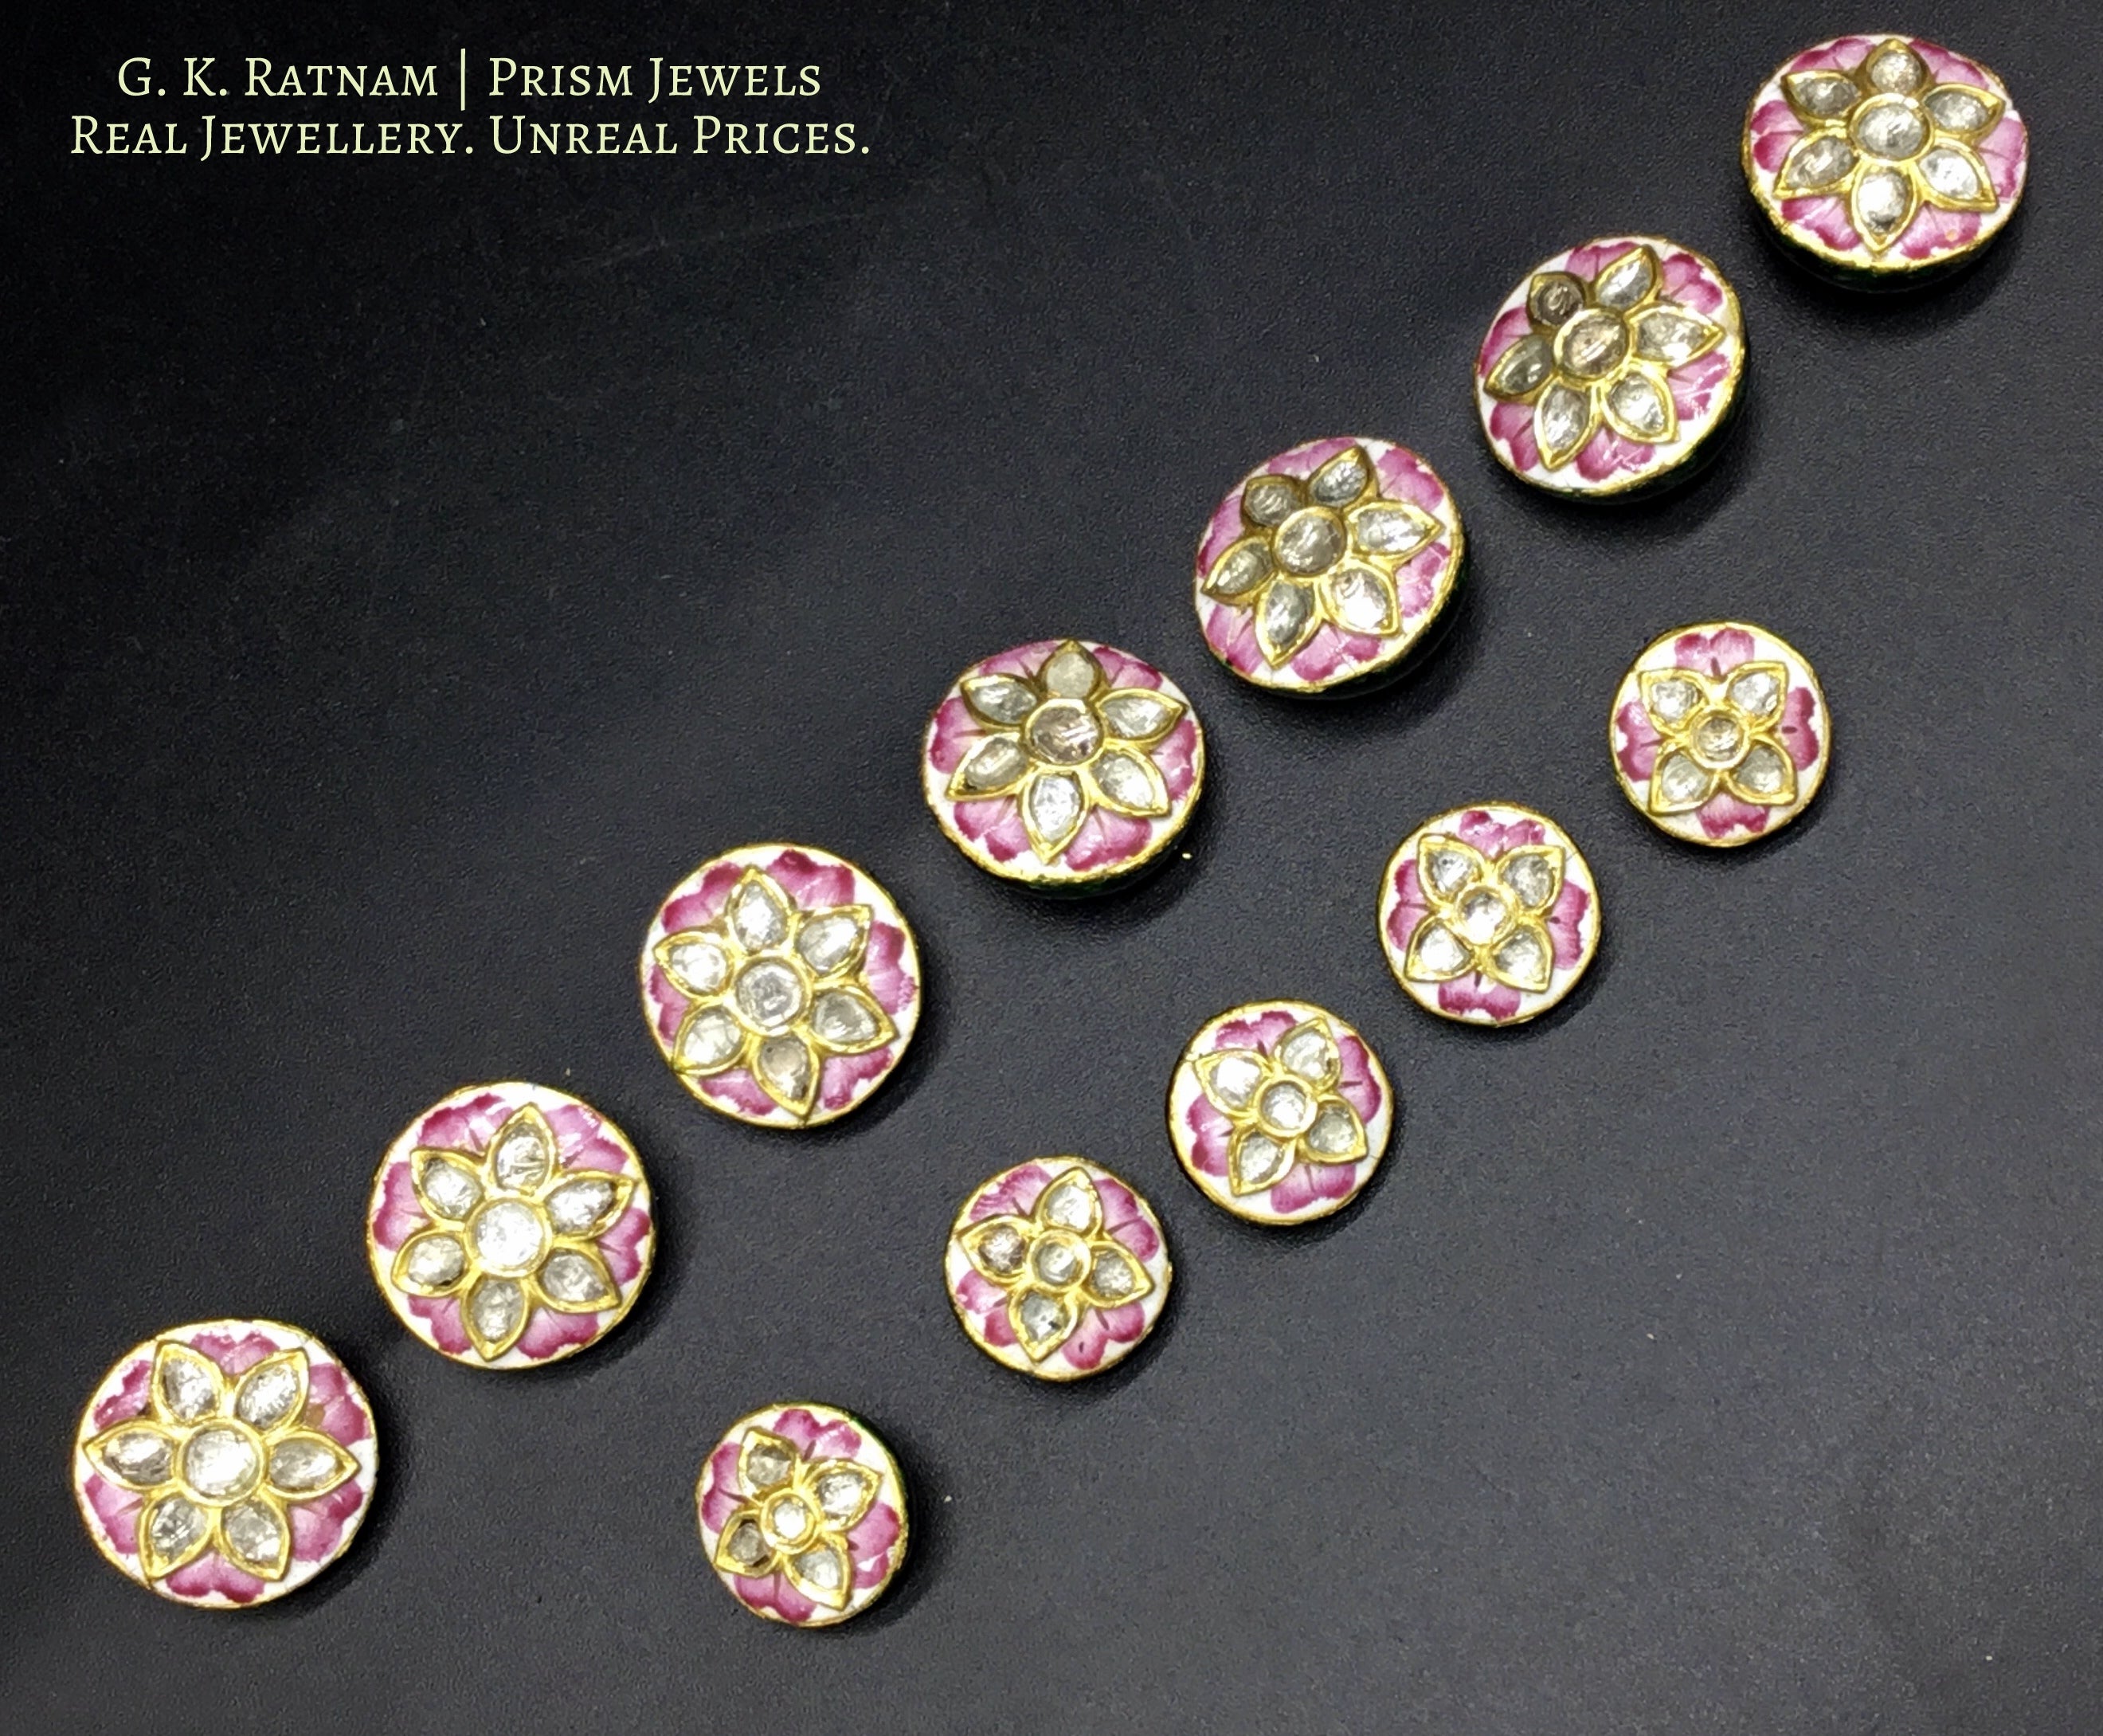 23k Gold and Diamond Polki pink enamel Sherwani Buttons for Men - gold diamond polki kundan meena jadau jewellery